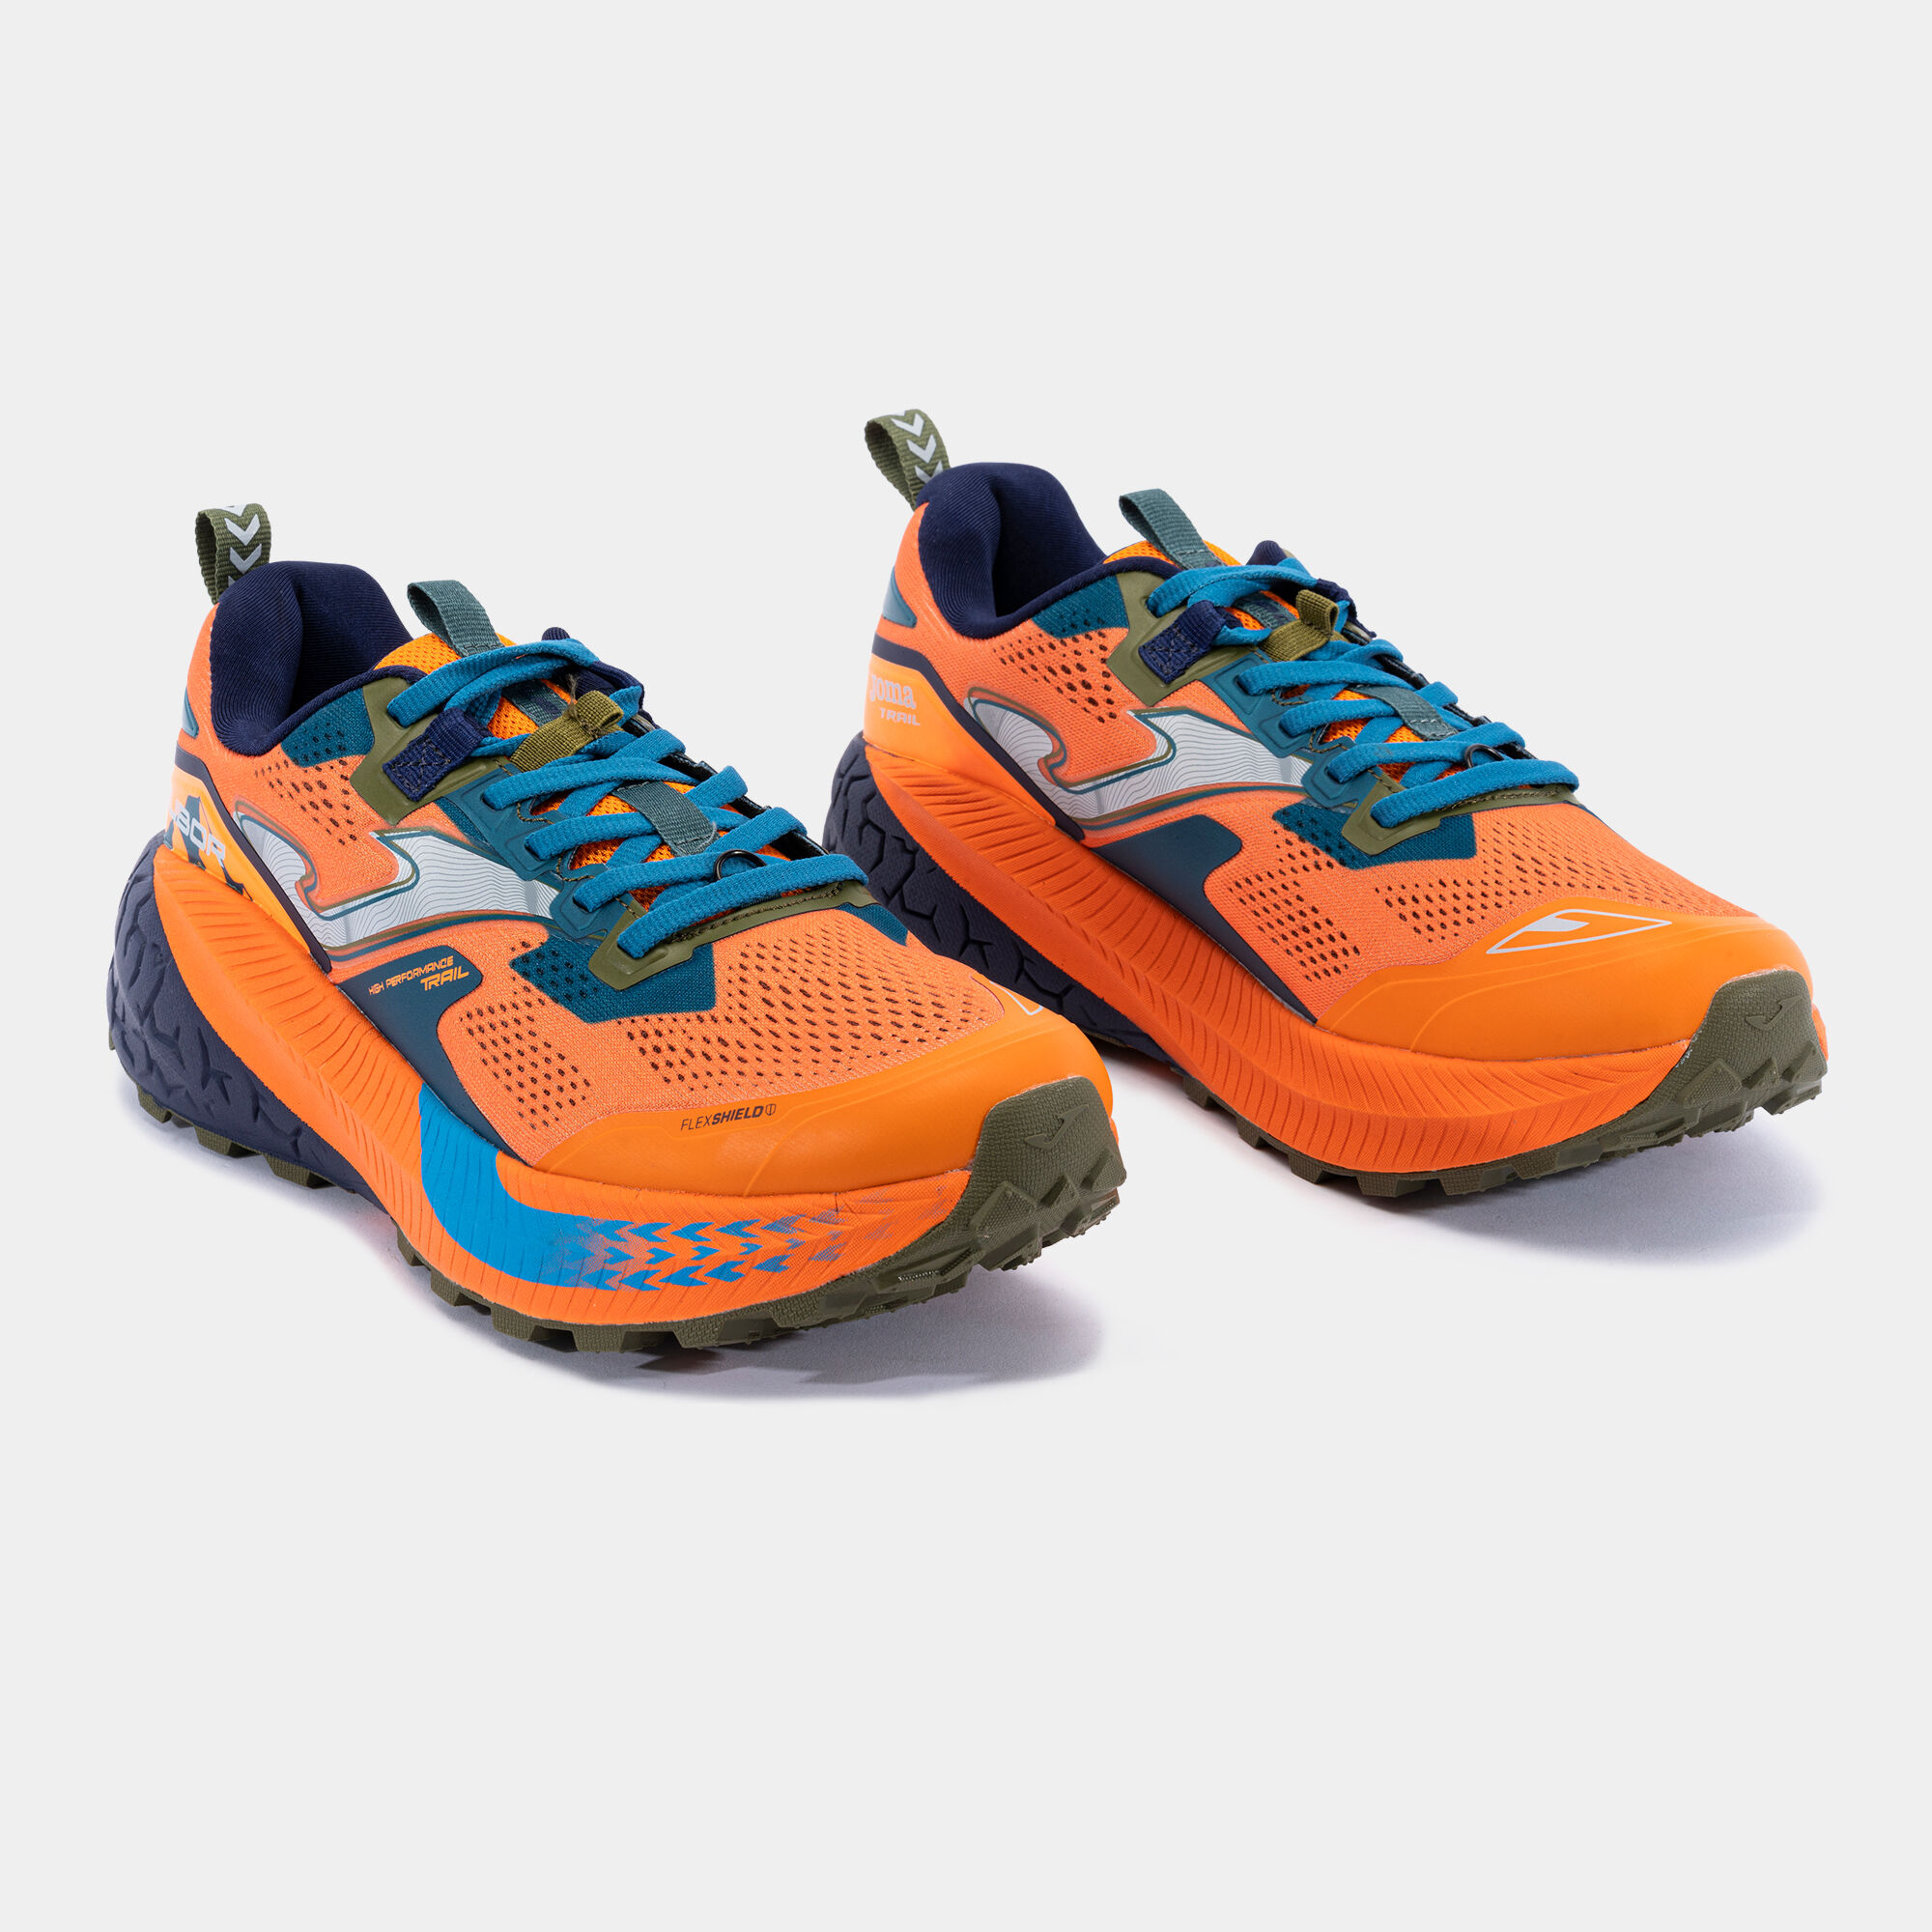 Chaussures trail running Tk.Kubor 23 homme orange bleu marine